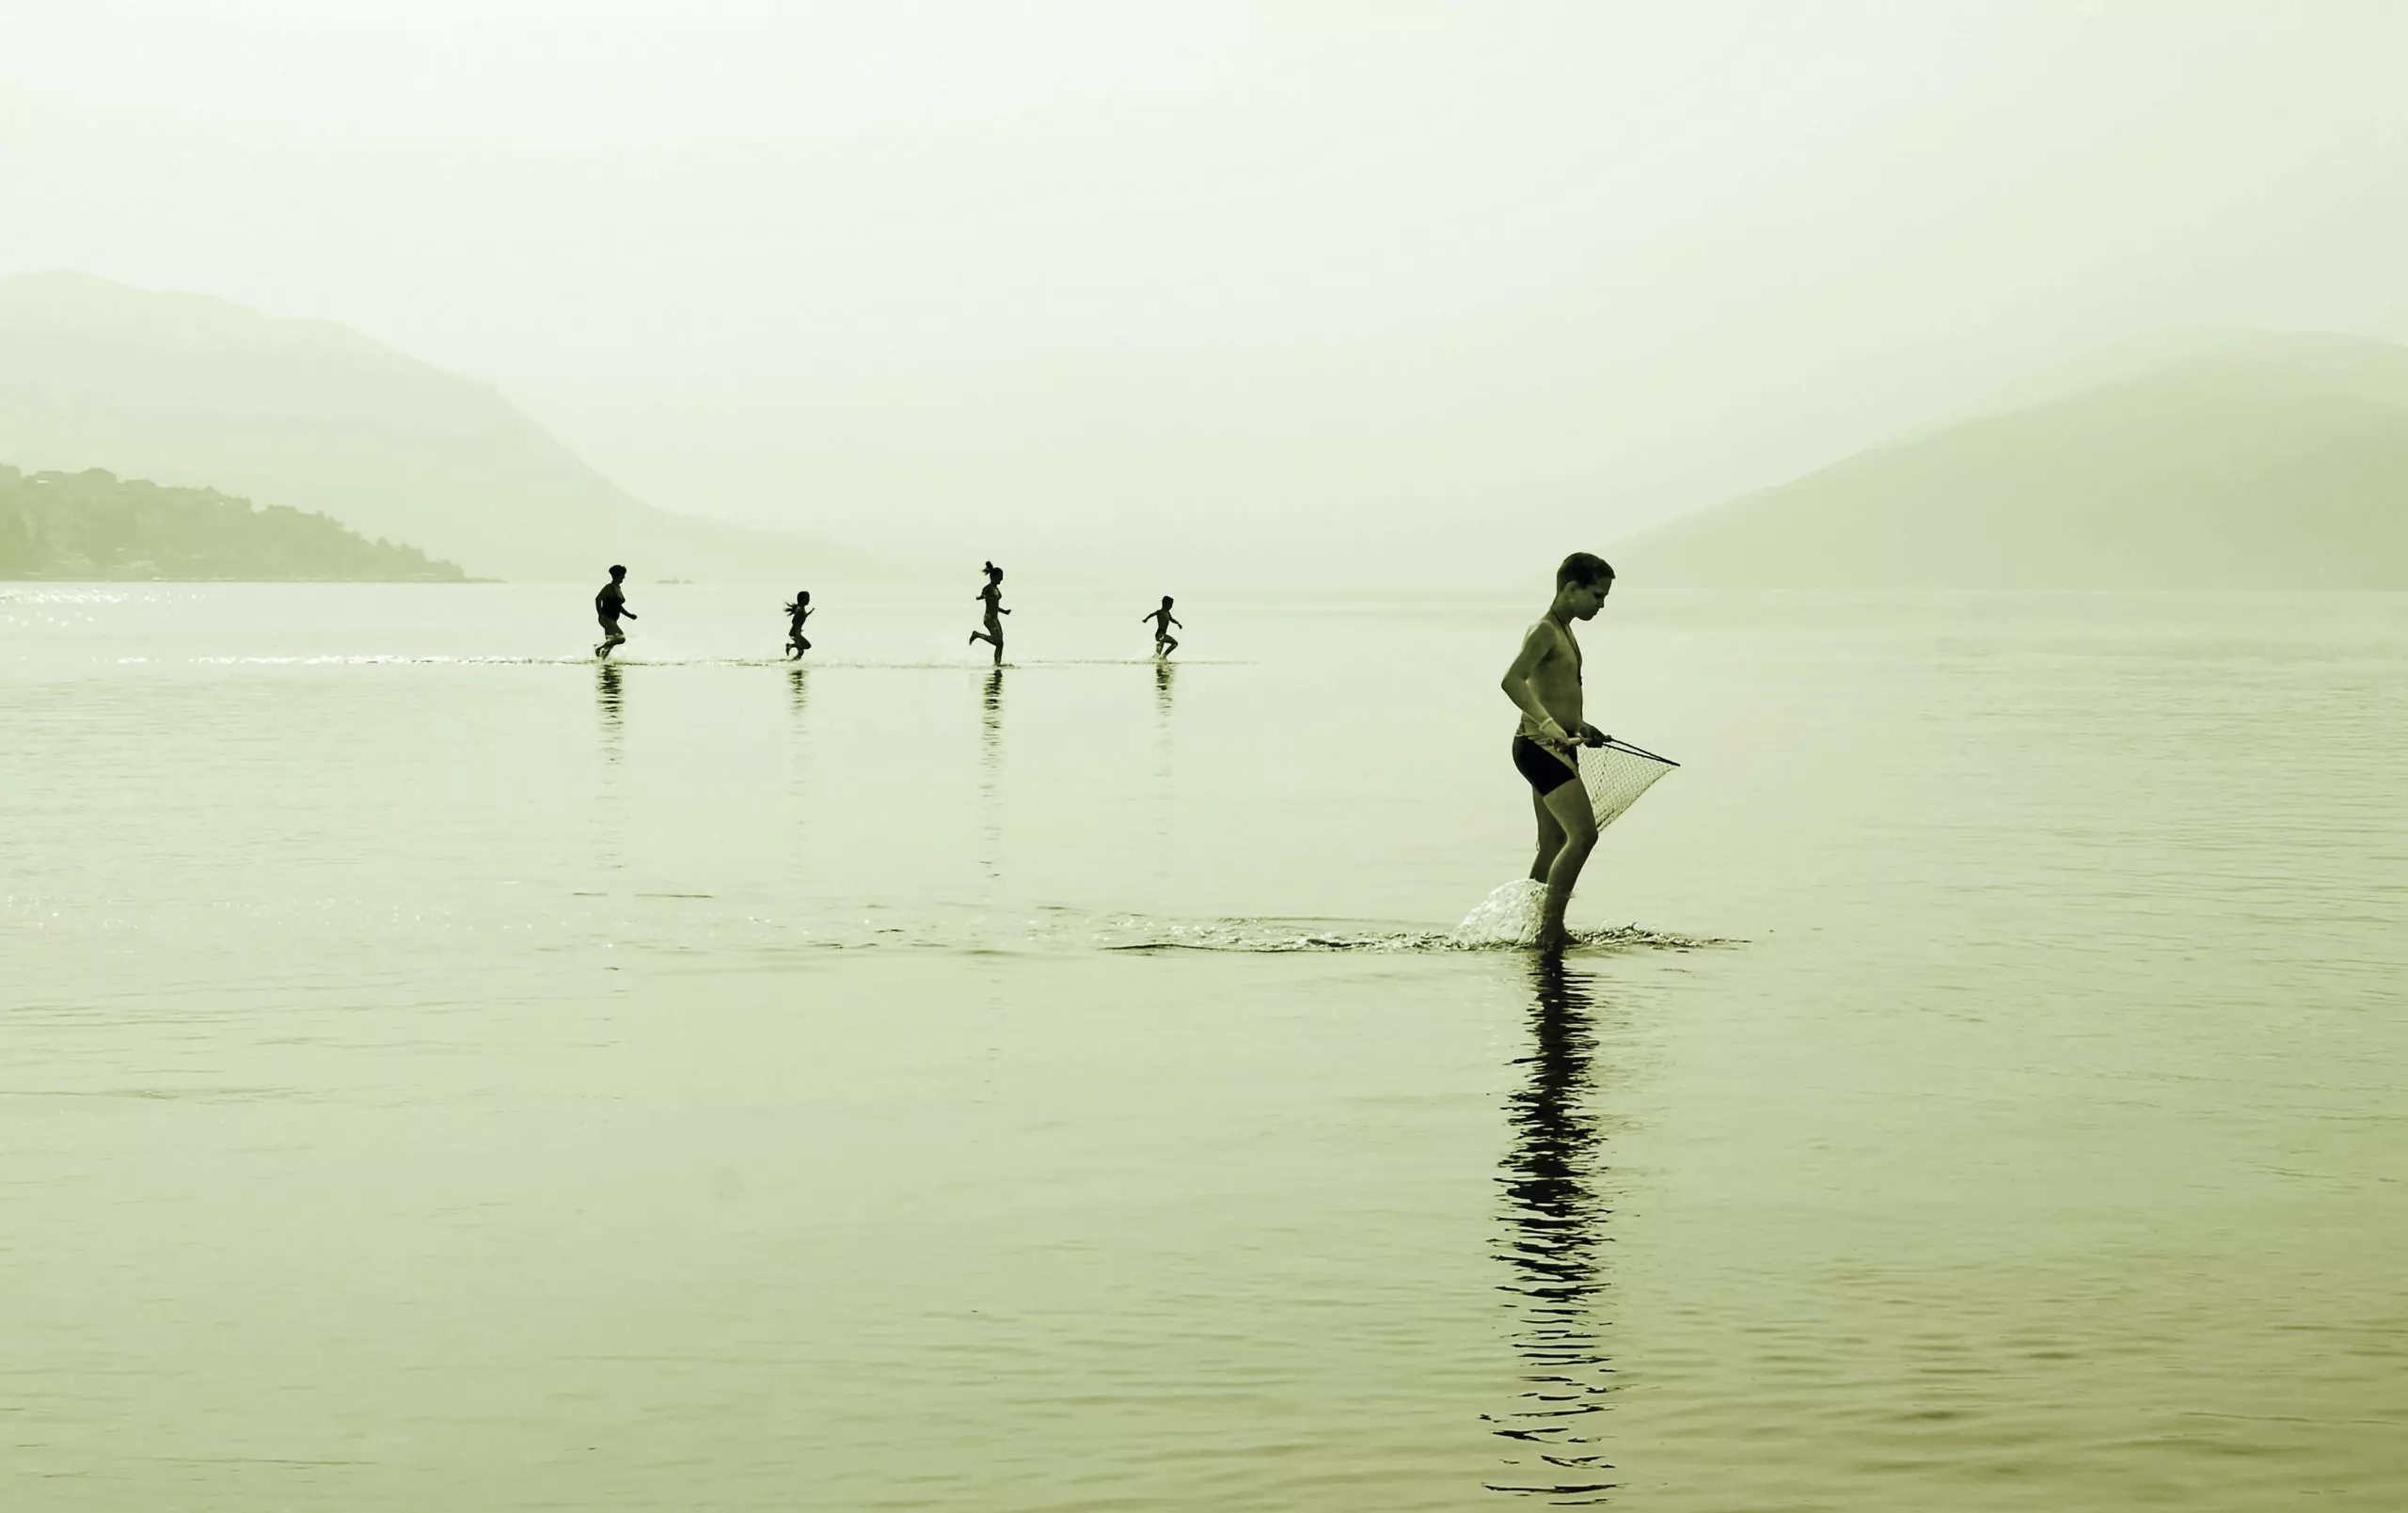 Wandbild (5259) Life is a beach by Dragan M. Babovic präsentiert: Aktion-Bewegung,Menschen,Wassersport